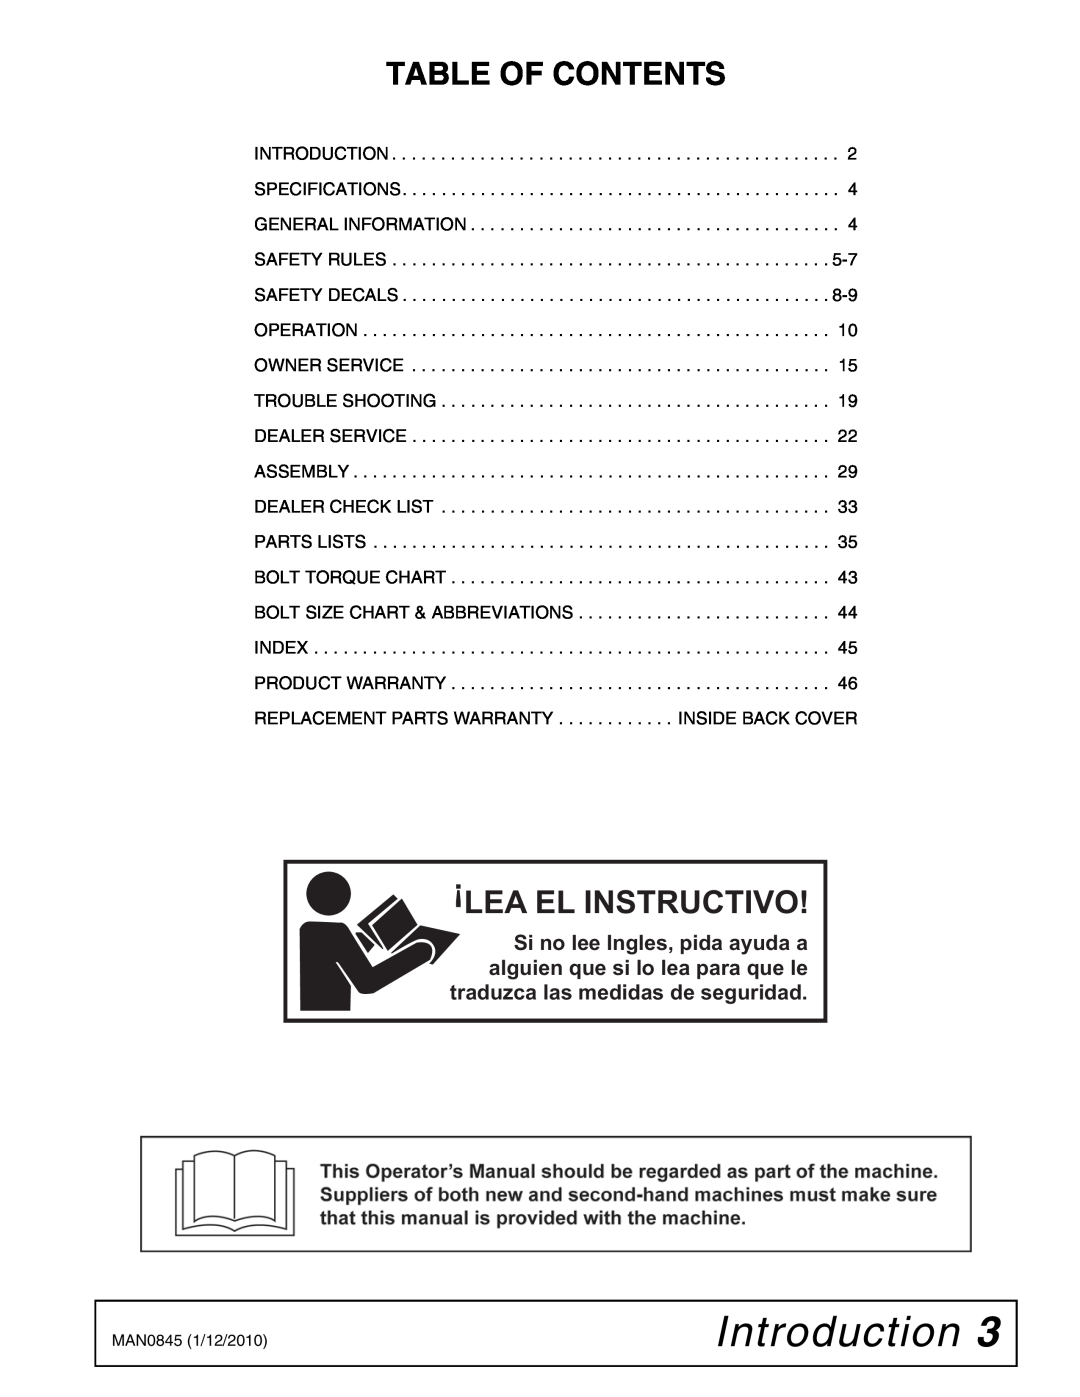 Woods Equipment RD990X manual Introduction, Table Of Contents, Lea El Instructivo 